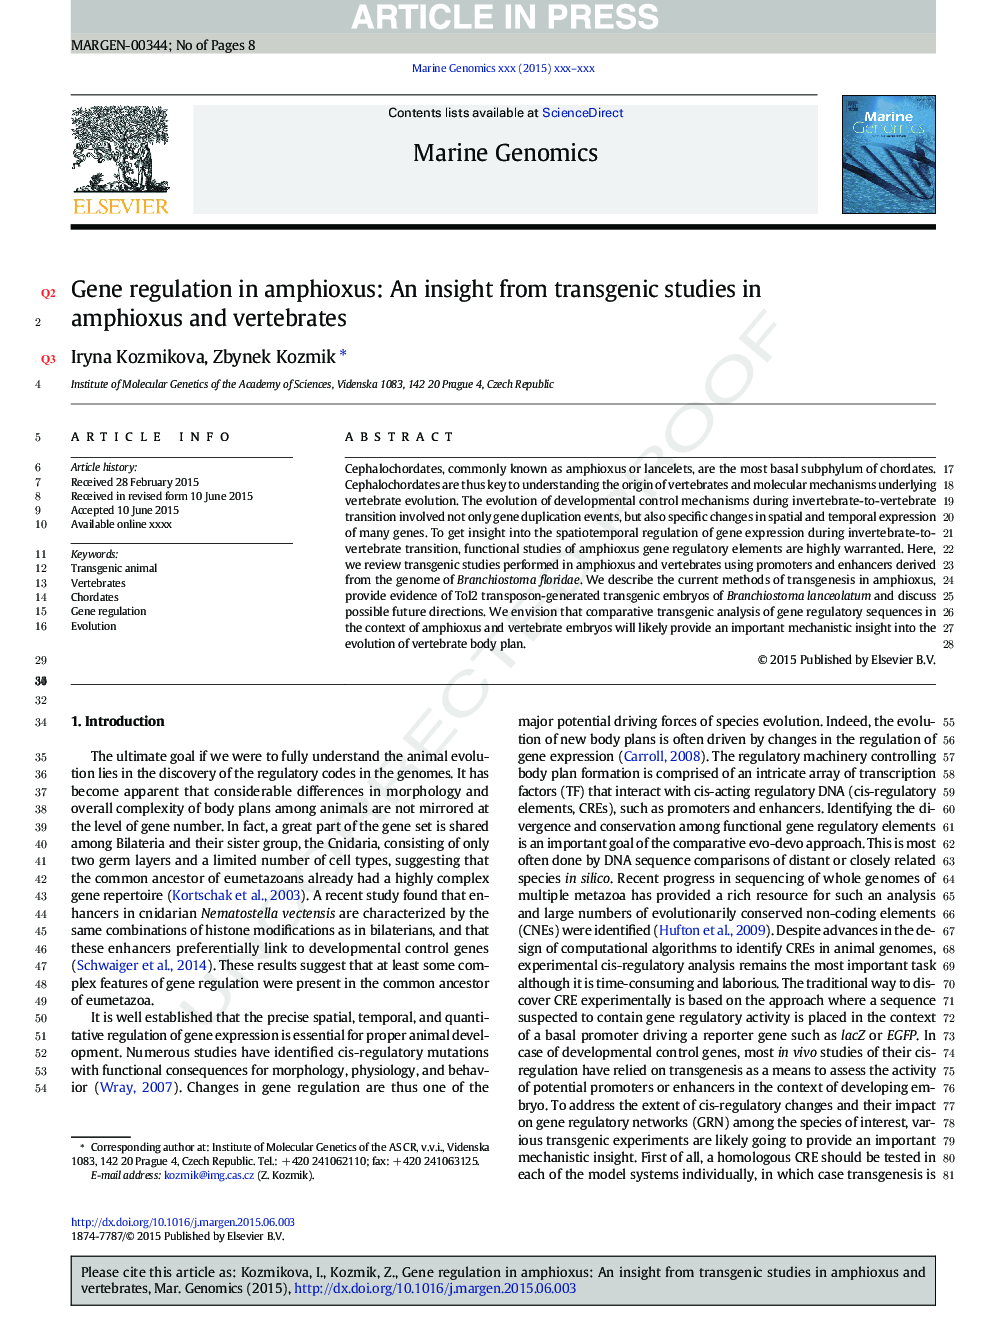 Gene regulation in amphioxus: An insight from transgenic studies in amphioxus and vertebrates